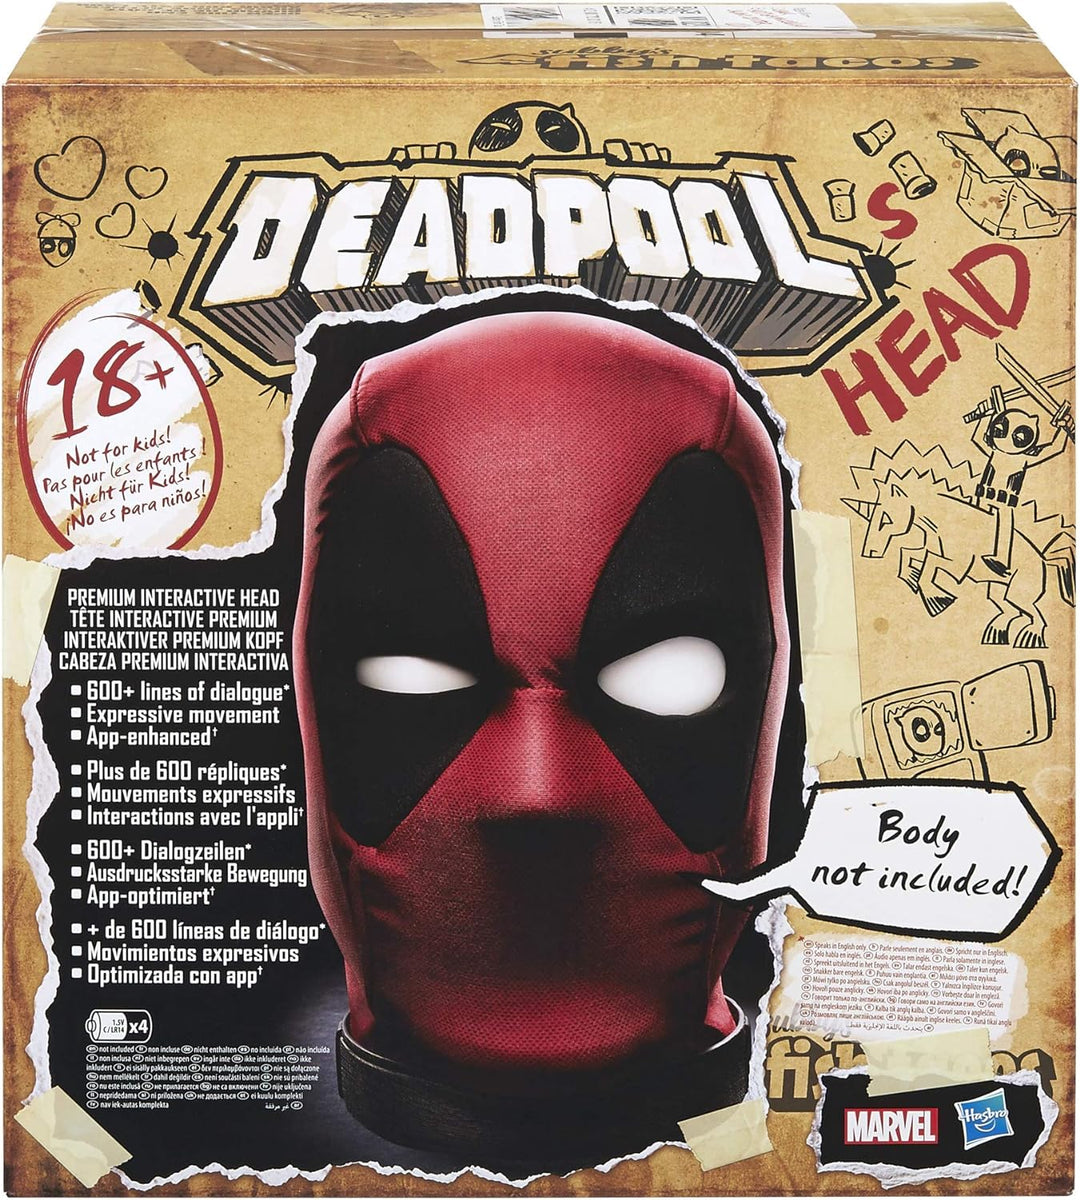 Marvel Legends Series Deadpool's Head Premium Interactive Head